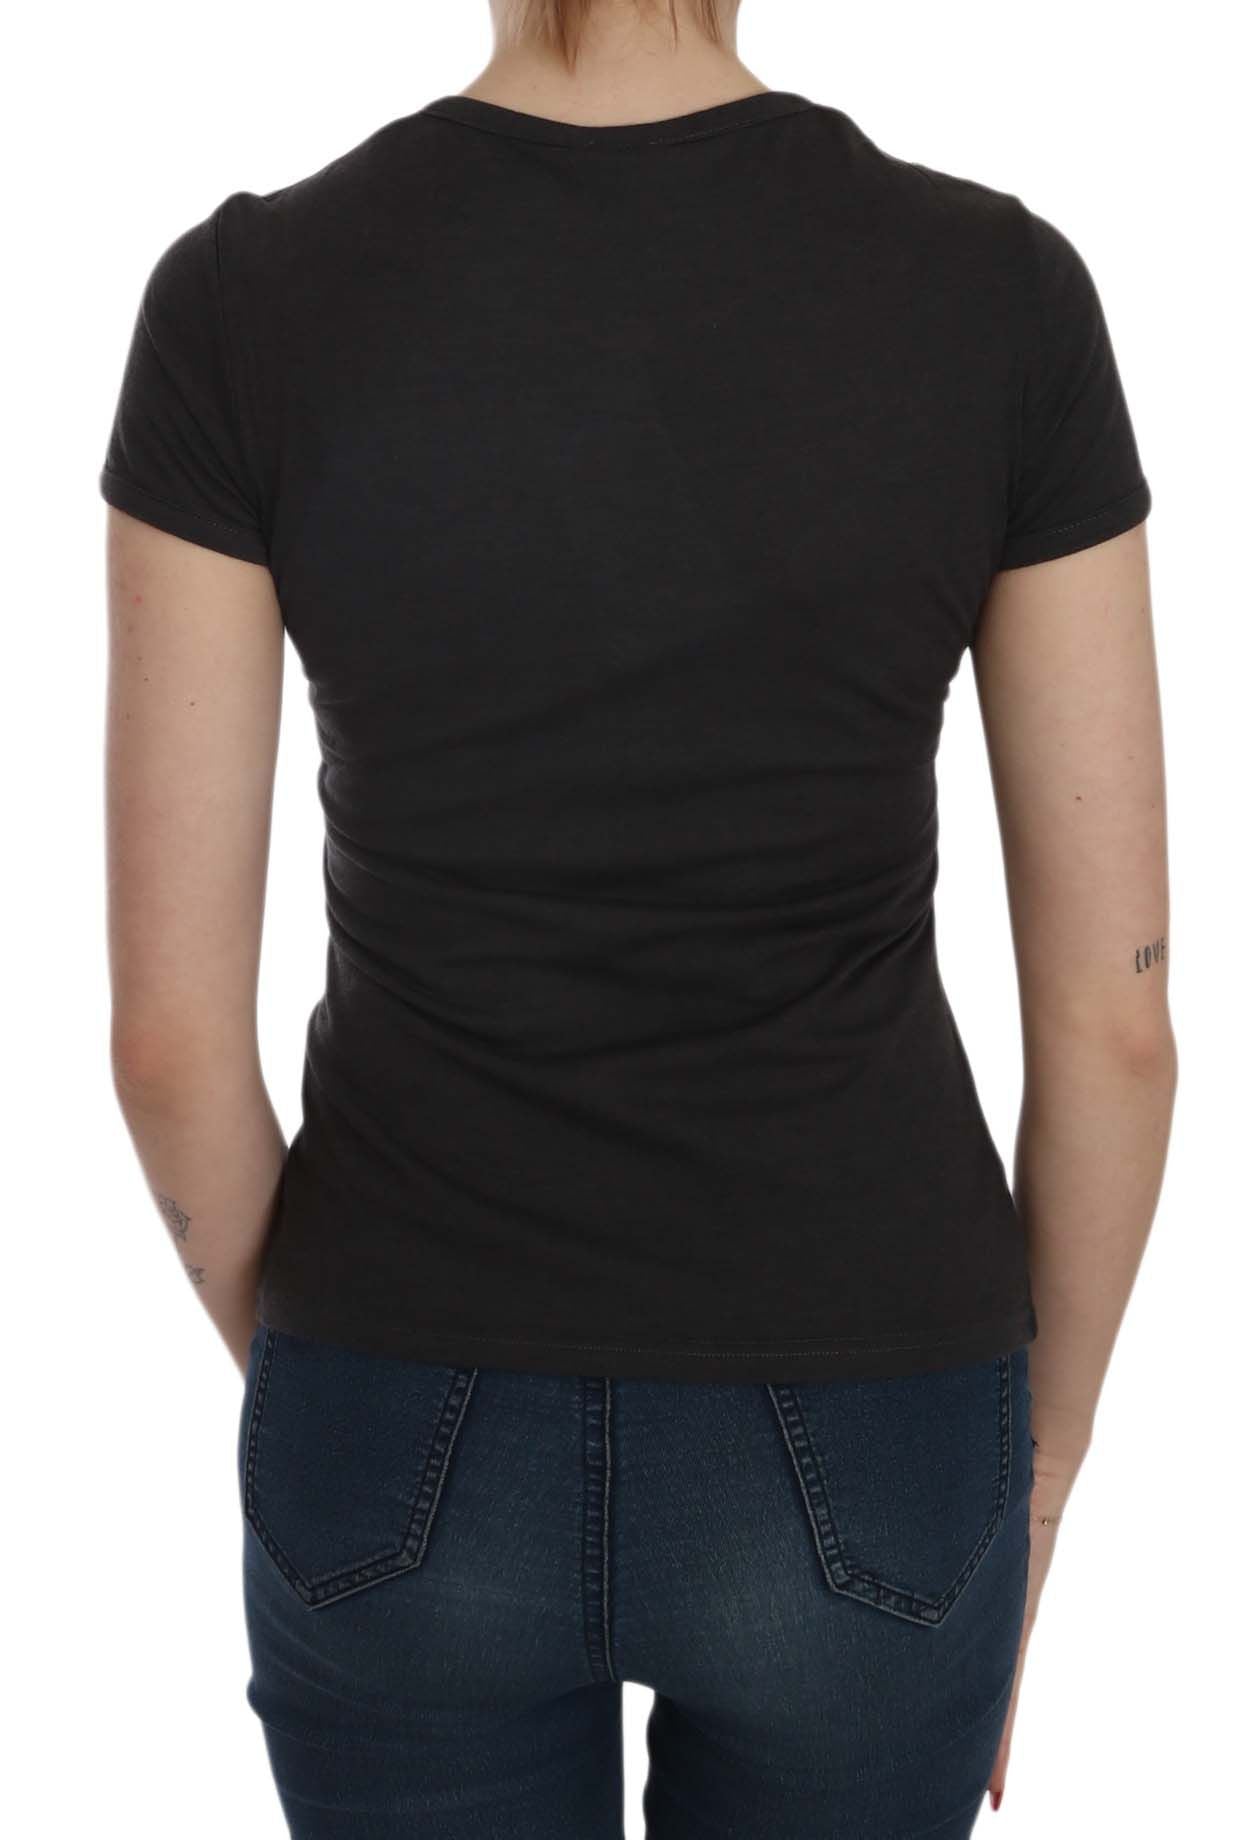 Exte Black Hearts Print Short Sleeve Casual Shirt Top